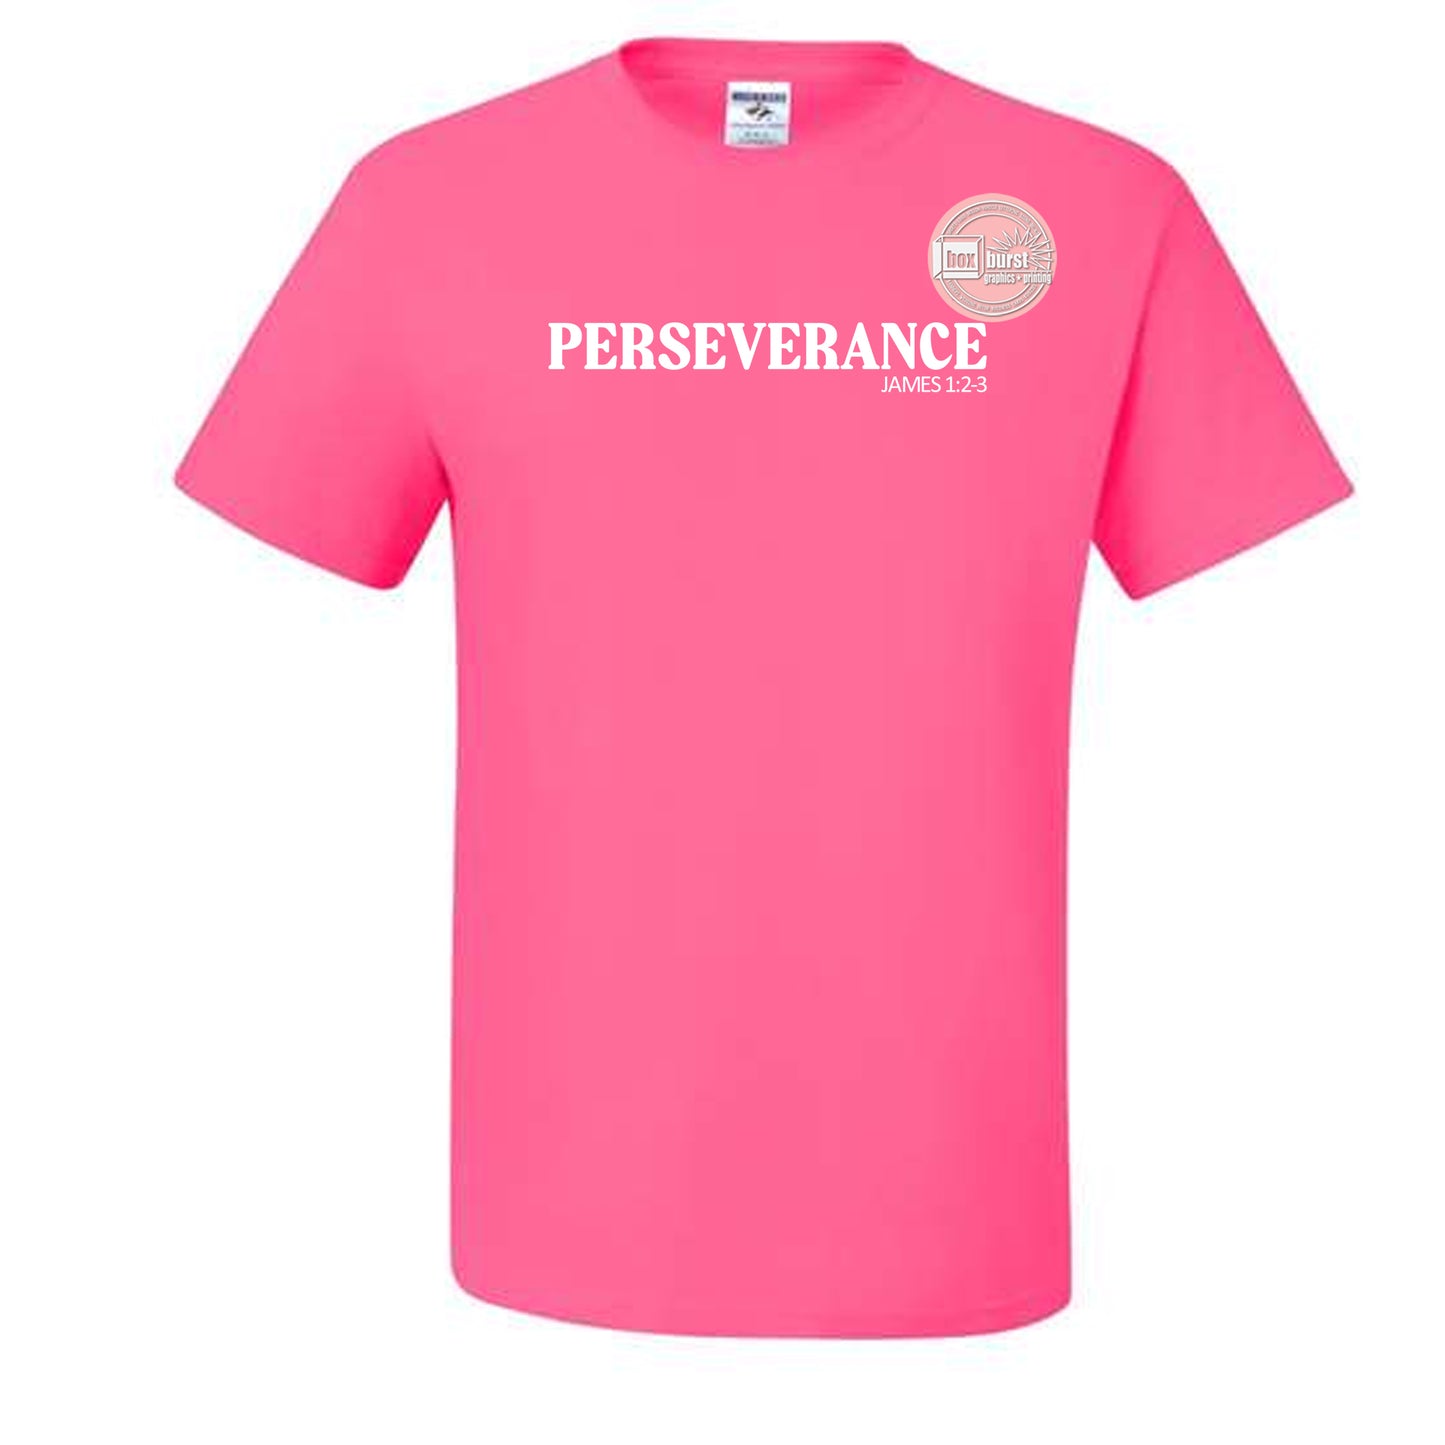 Perseverance t-shirt